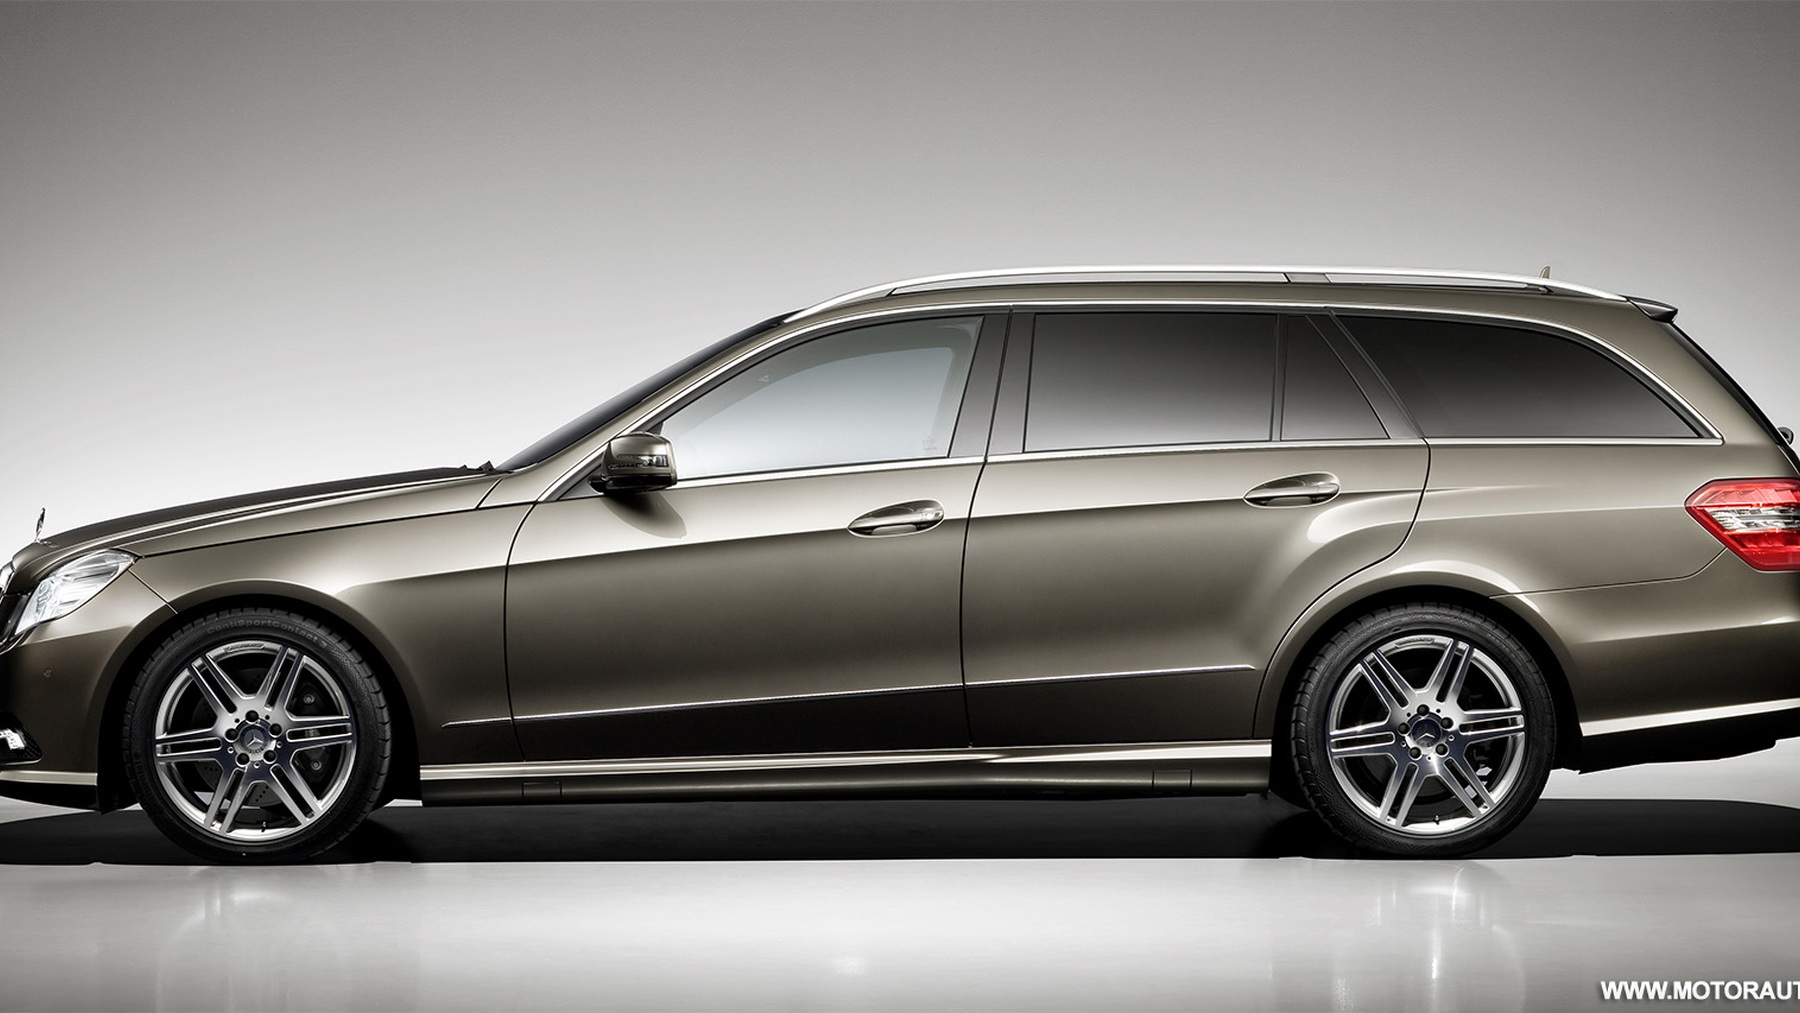 Mercedes Benz E Class Estate Wagon Official Details 50 4matic Only U S Bound Model